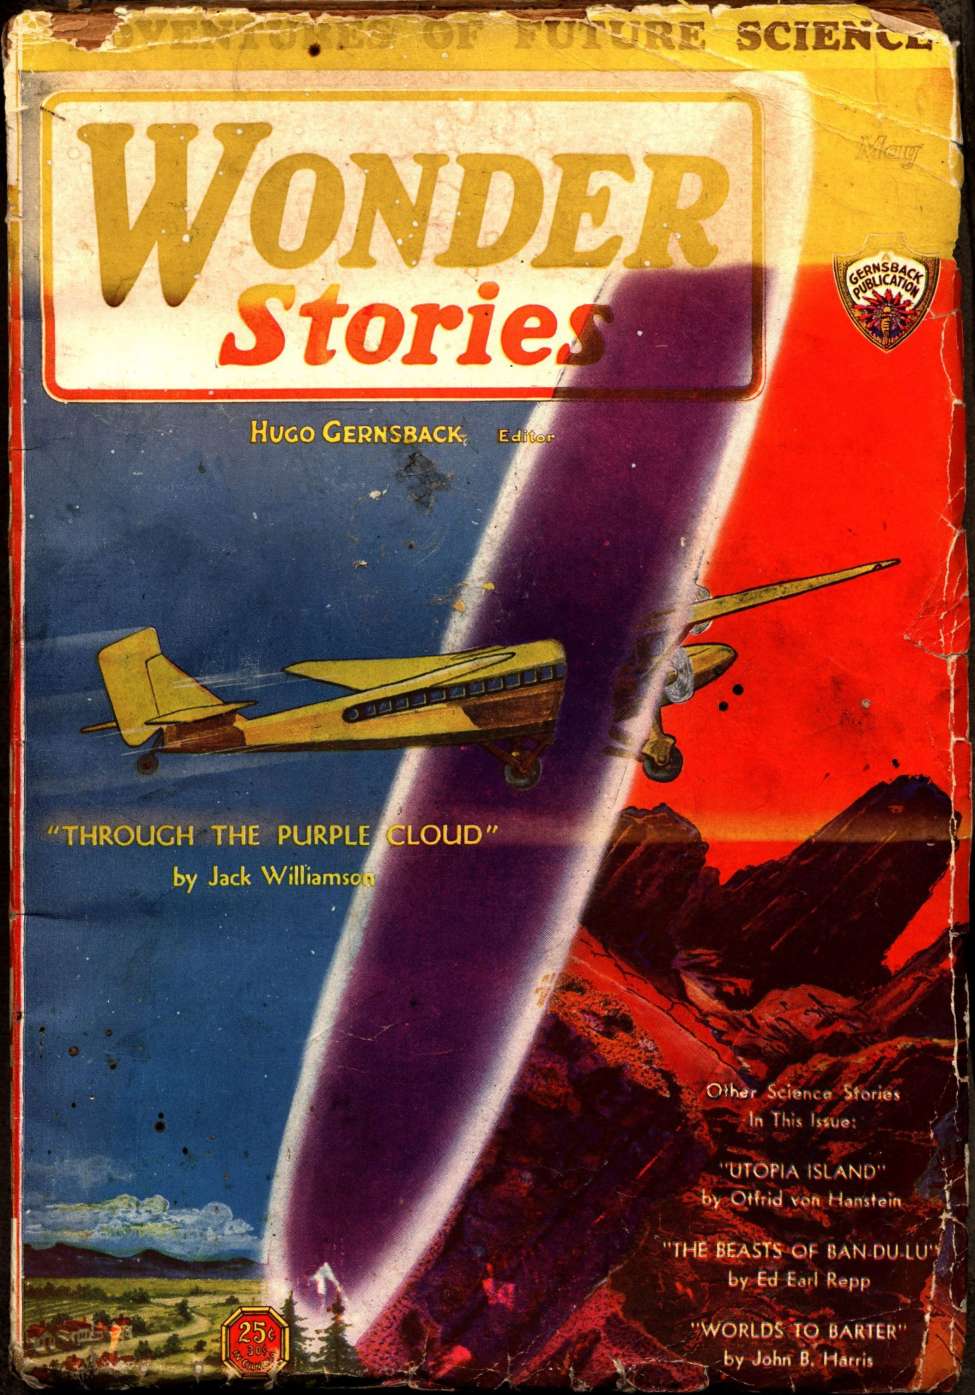 Comic Book Cover For Wonder Stories v2 12 - Utopia Island - Otfrid von Hanstein